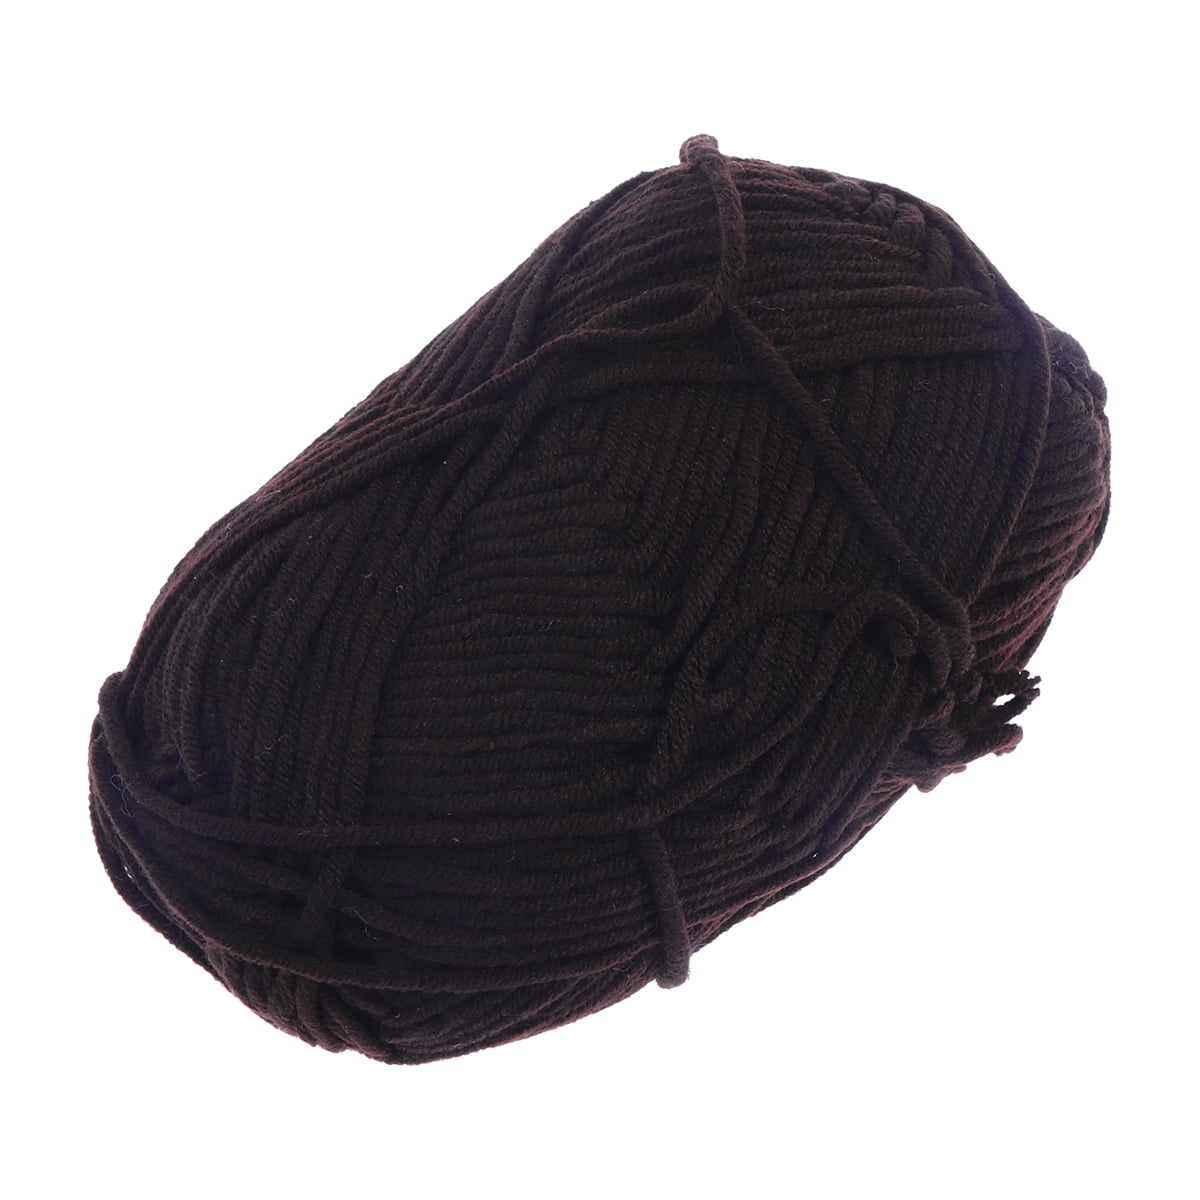 Amrka 100g/1ball Soft Cotton Hand Knitting Yarn Super Chunky Bulky Woven Worested Yarn for Crochet (Black & White)